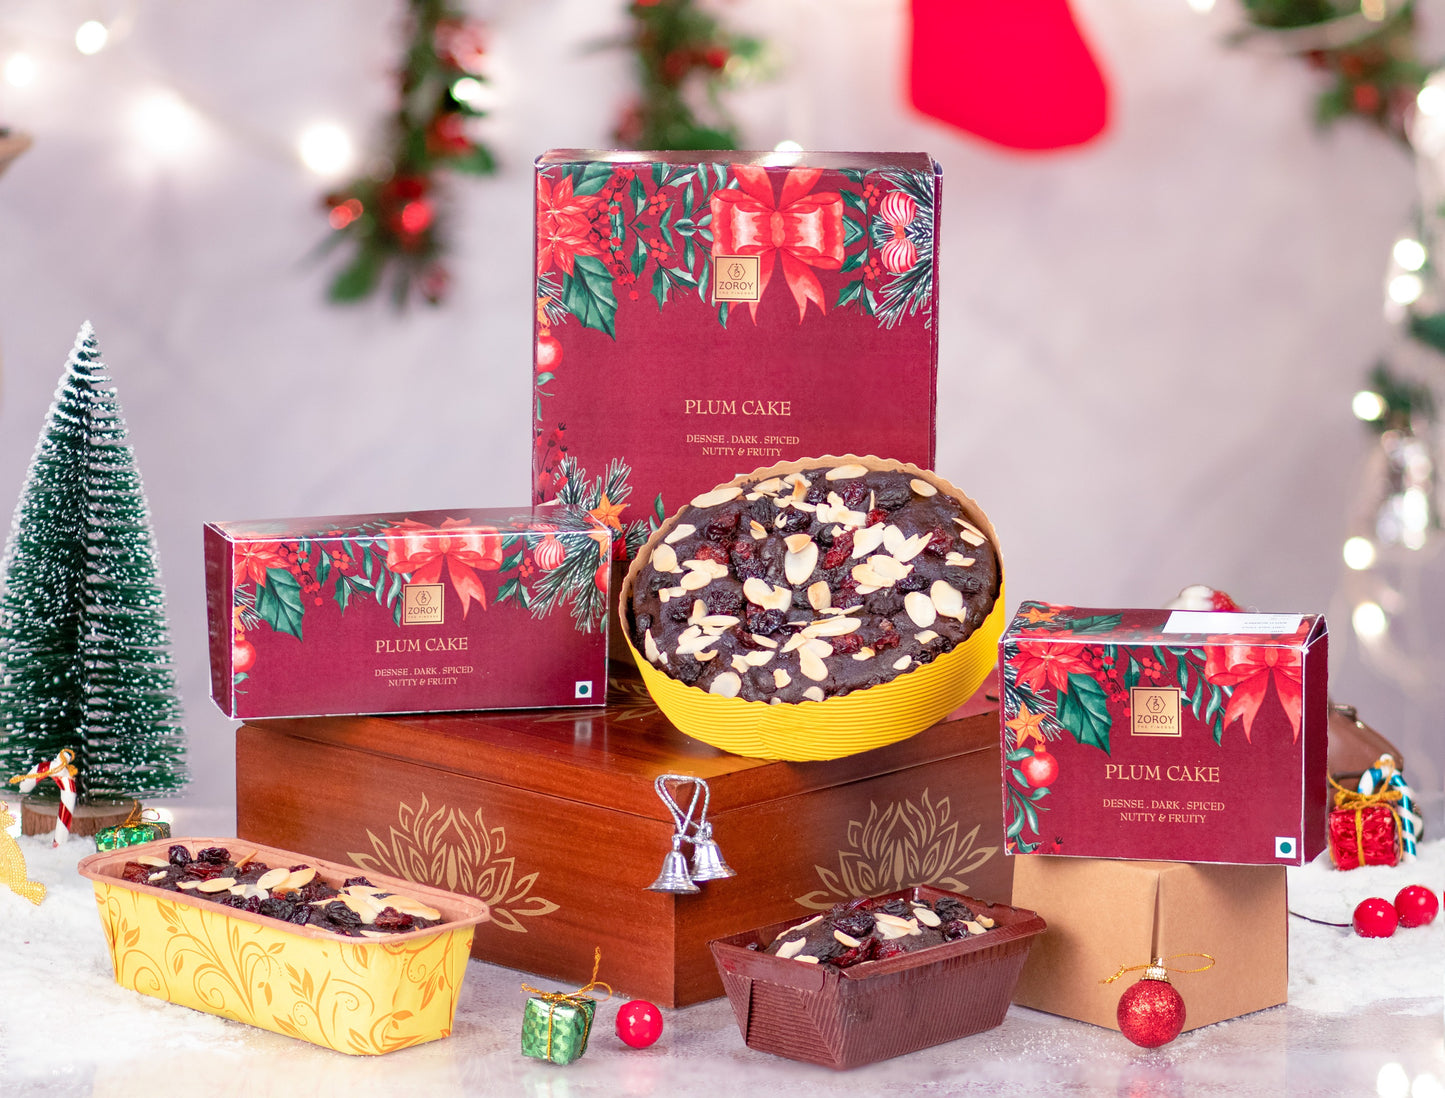 ZOROY Luxury Chocolate Carnival Hexagon Gift Hamper For Corporate Celebration Christmas & New Year Wedding | Chocolate Coated Nut | Plum cake | Belgian style bar | Candle Assorted Chocolate Combo